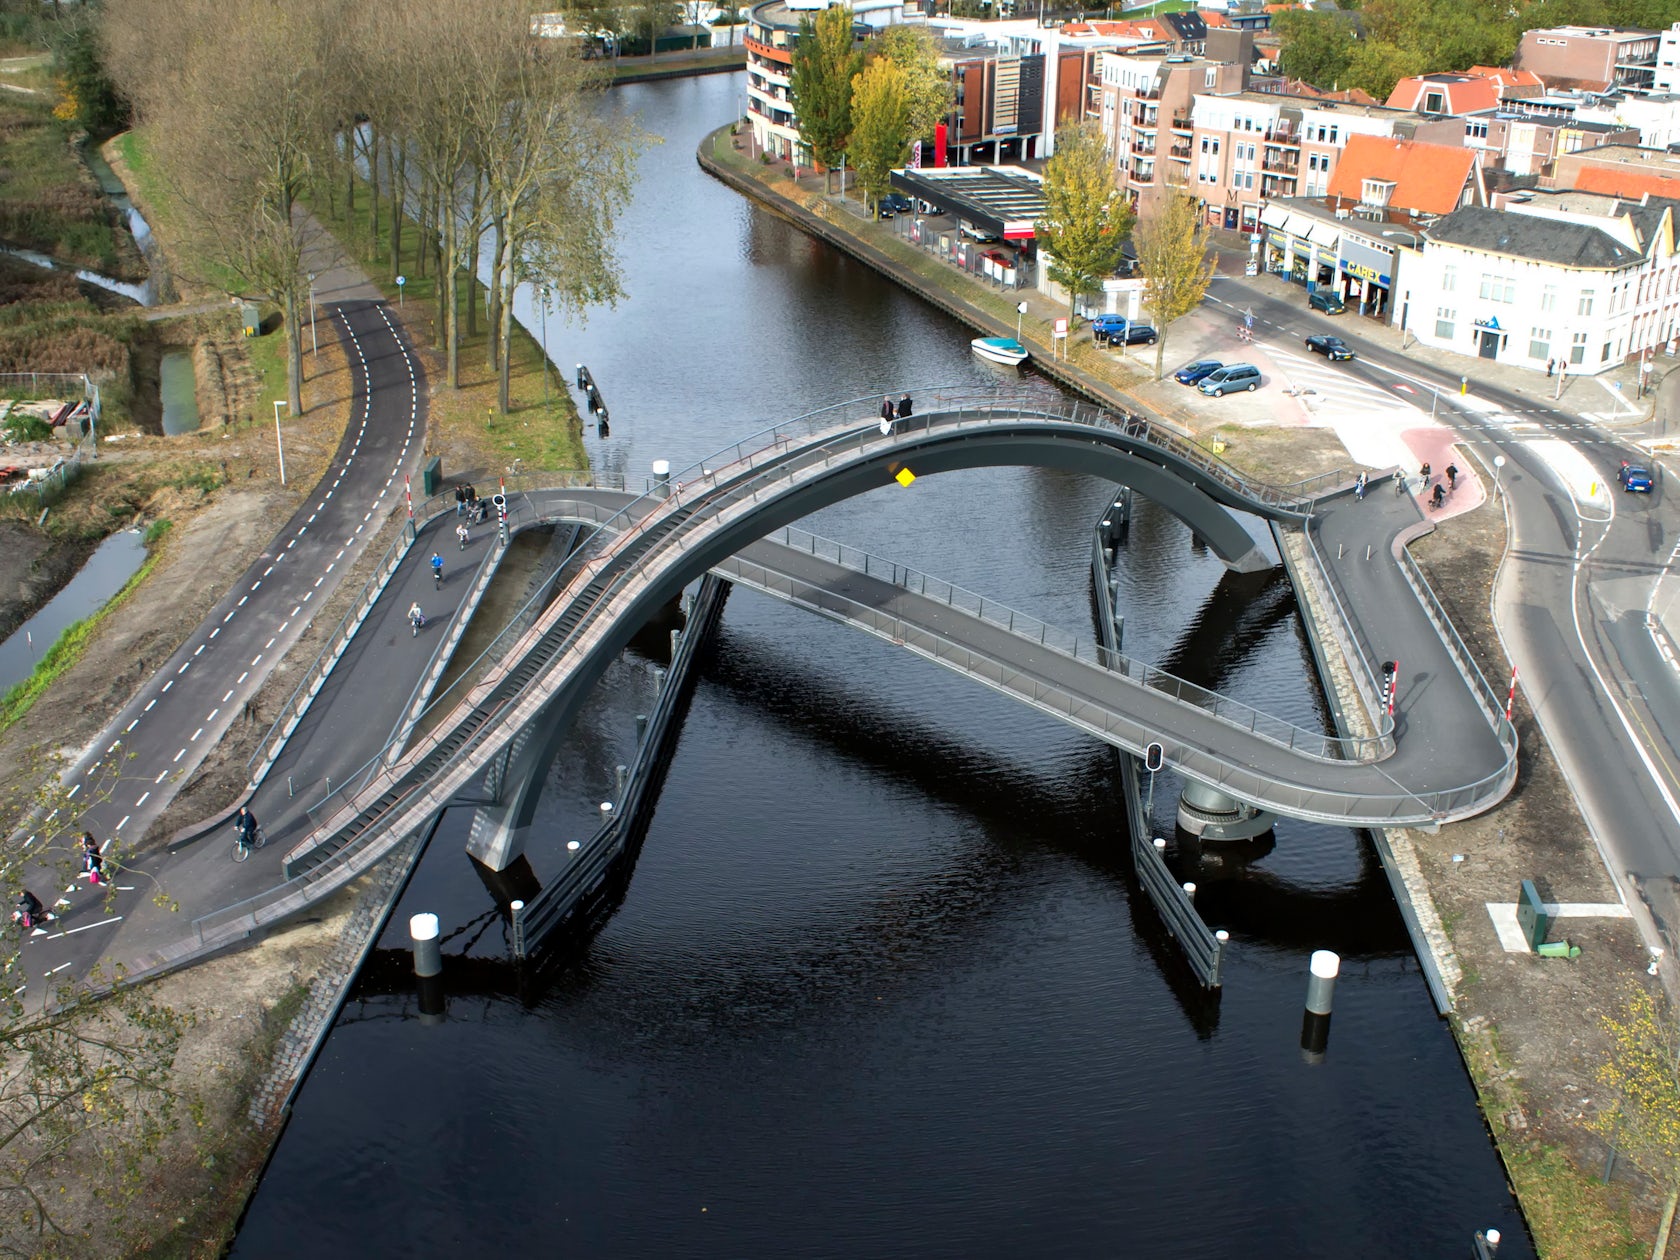 BFS — Pestszentlorinc bicycle-pedestrian bridge